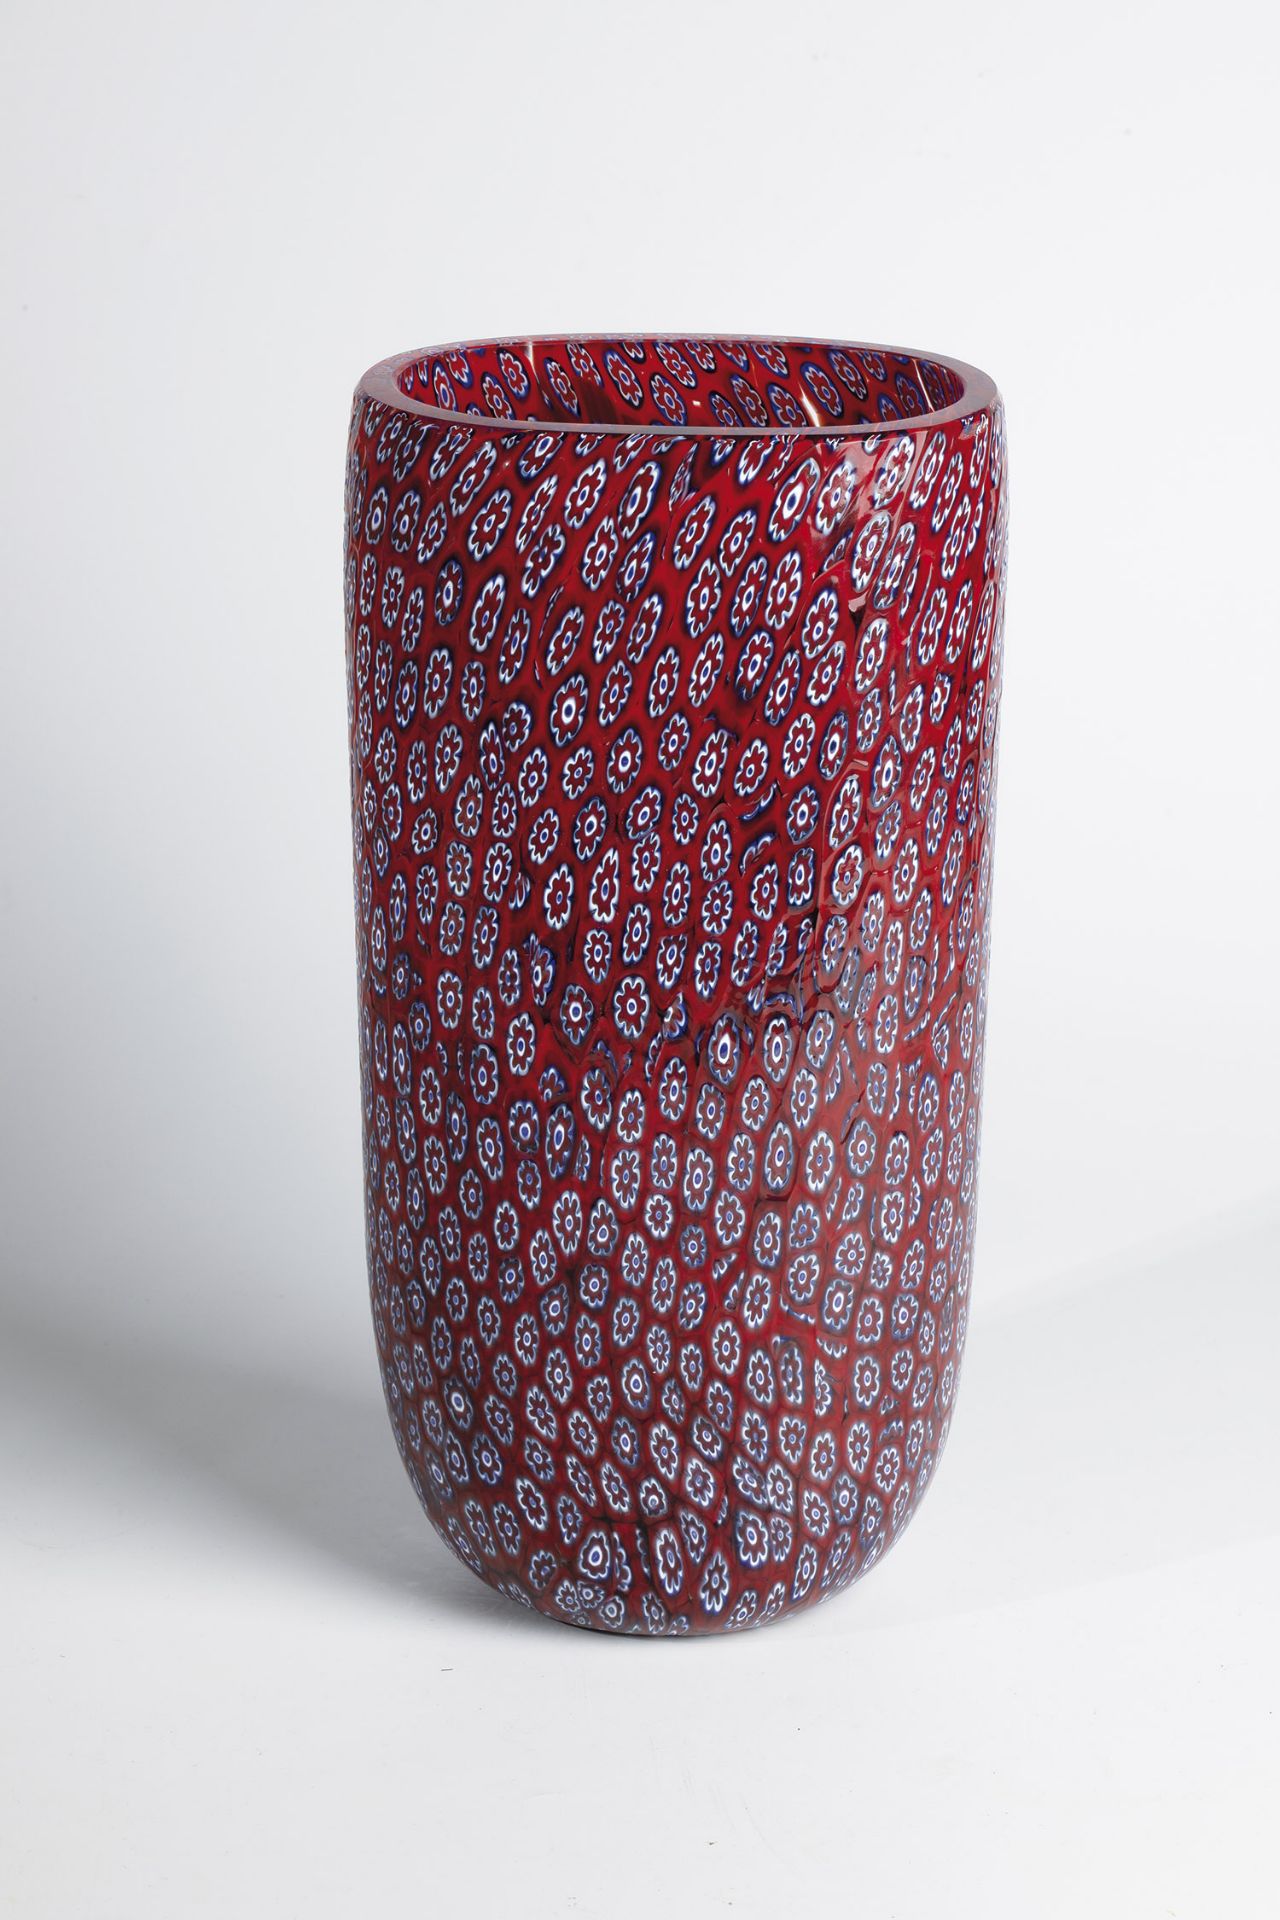 Gambaro & Poggi vase, Murano, late 20th century Colourless glass. Fused murrine decor in red, blue